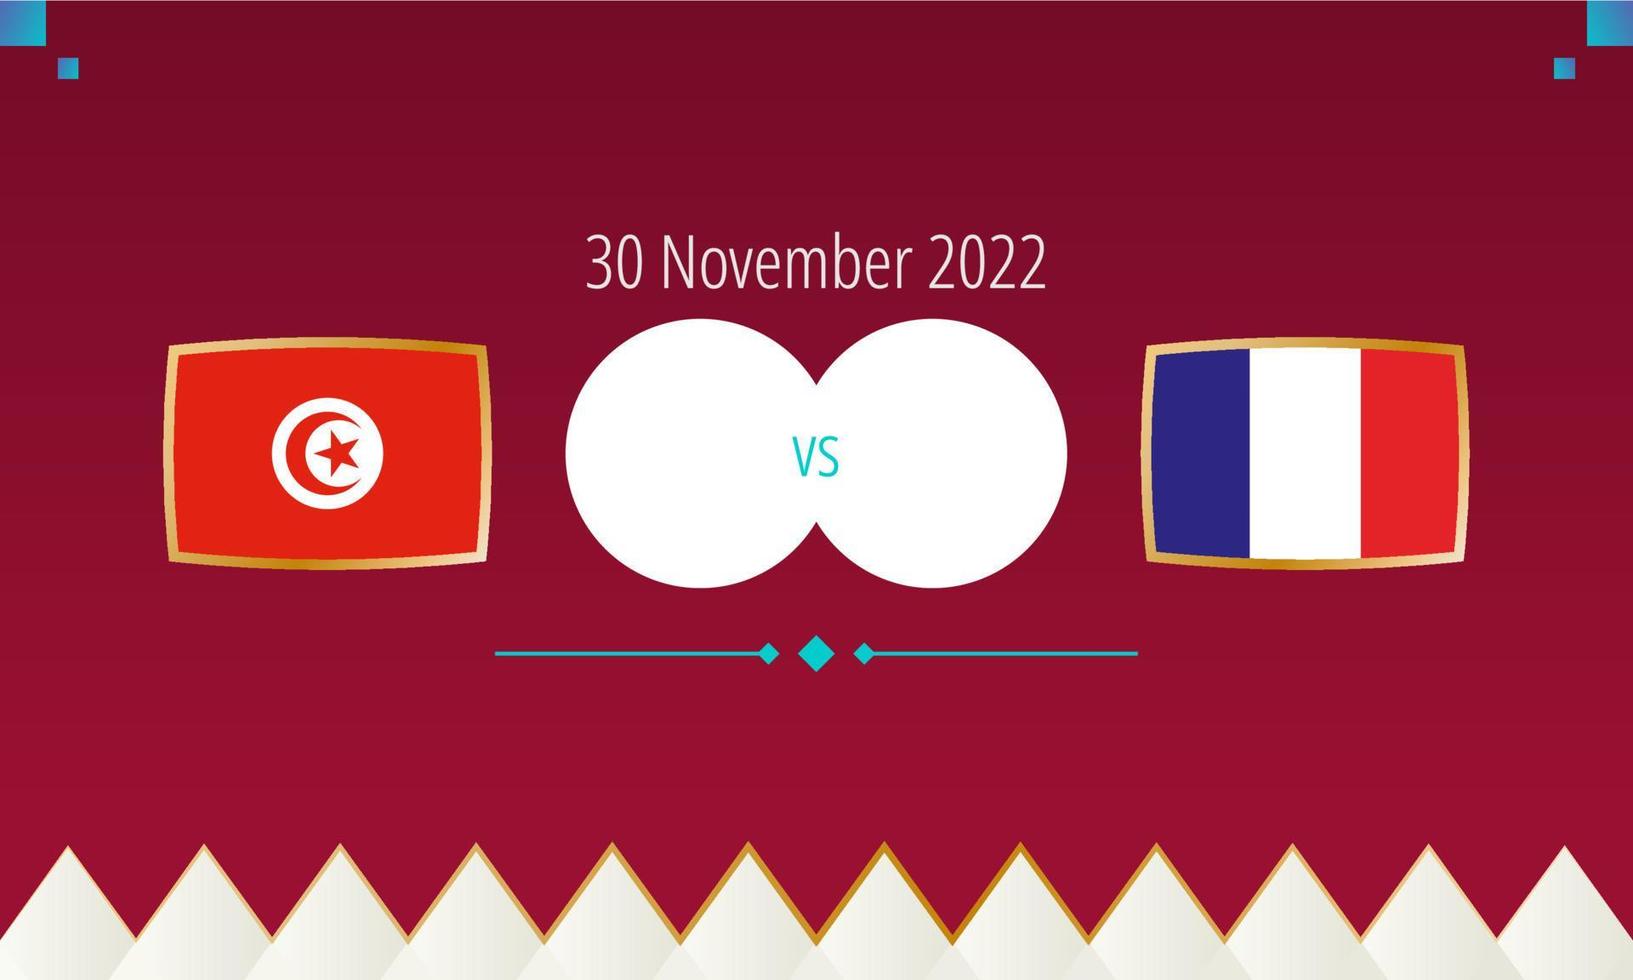 Tunisia vs France football match, international soccer competition 2022. vector